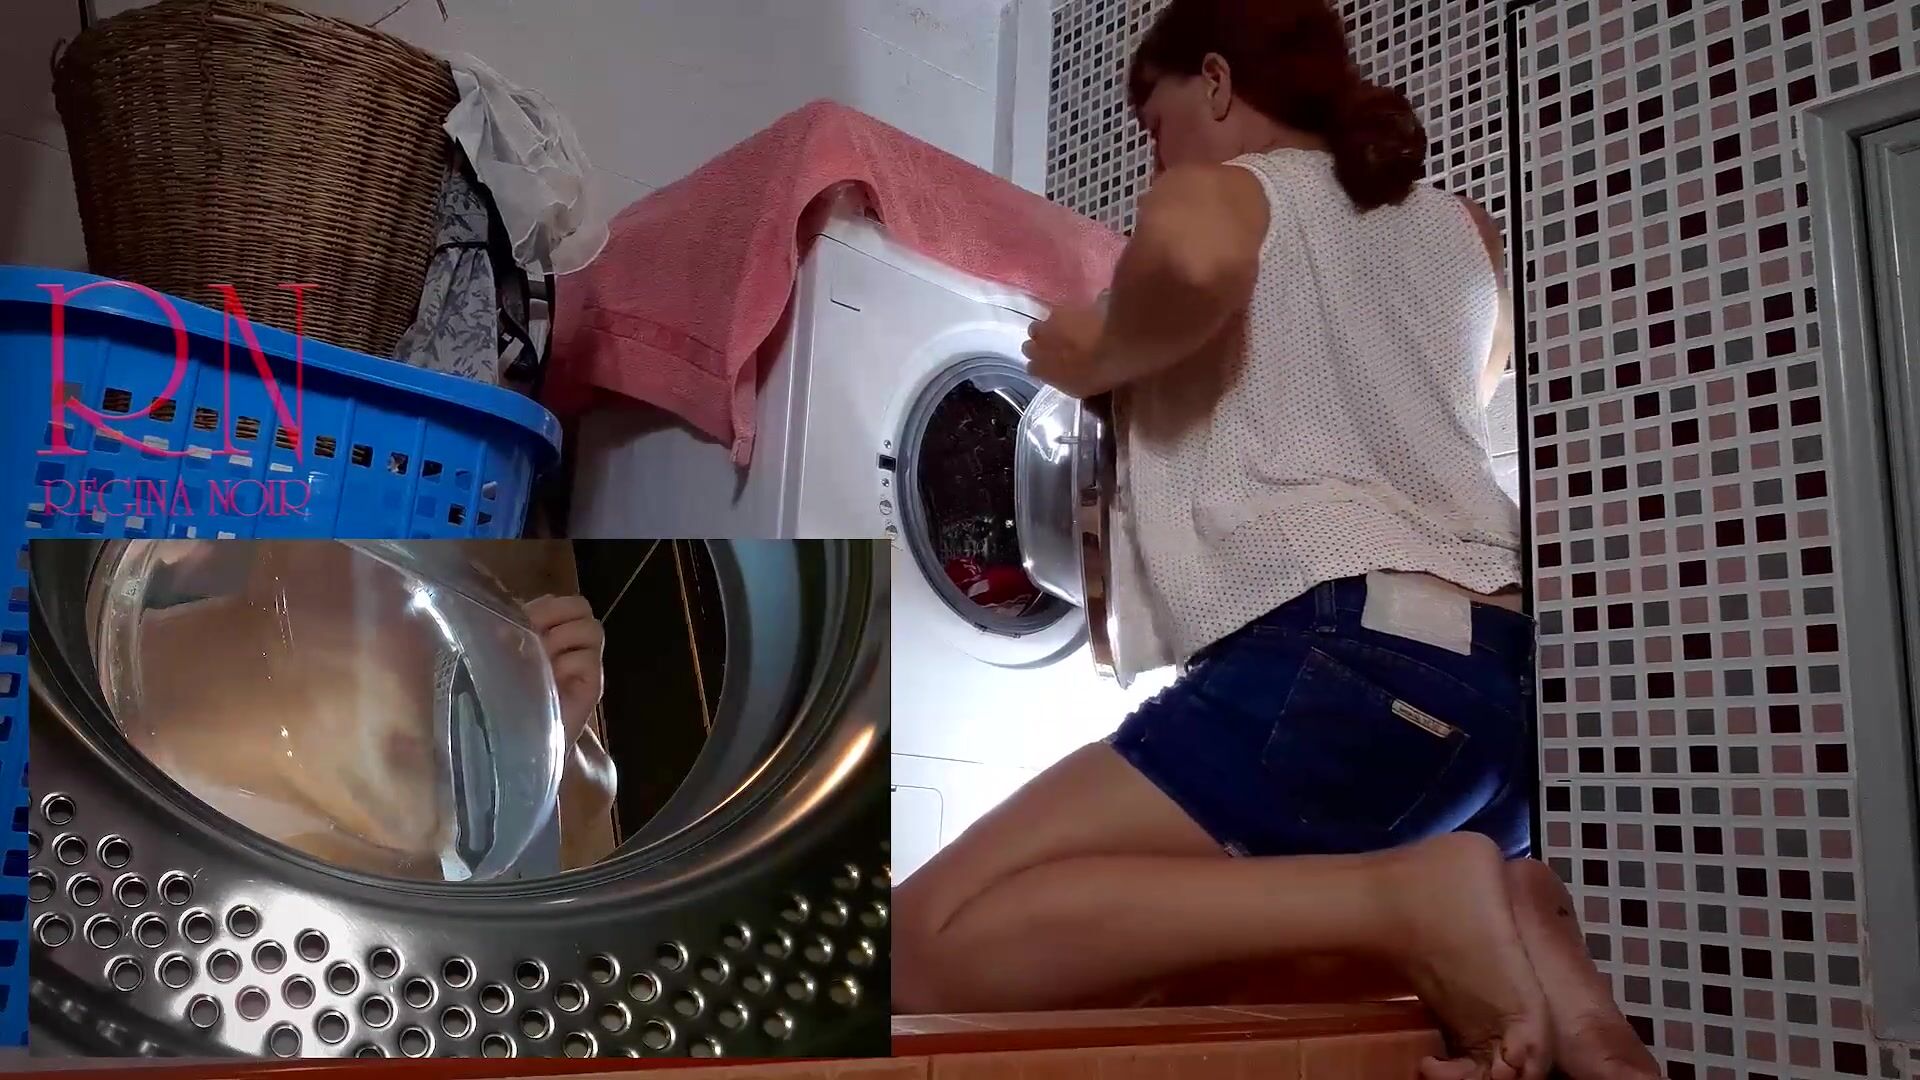 hausewife washing dealer home Fucking Pics Hq